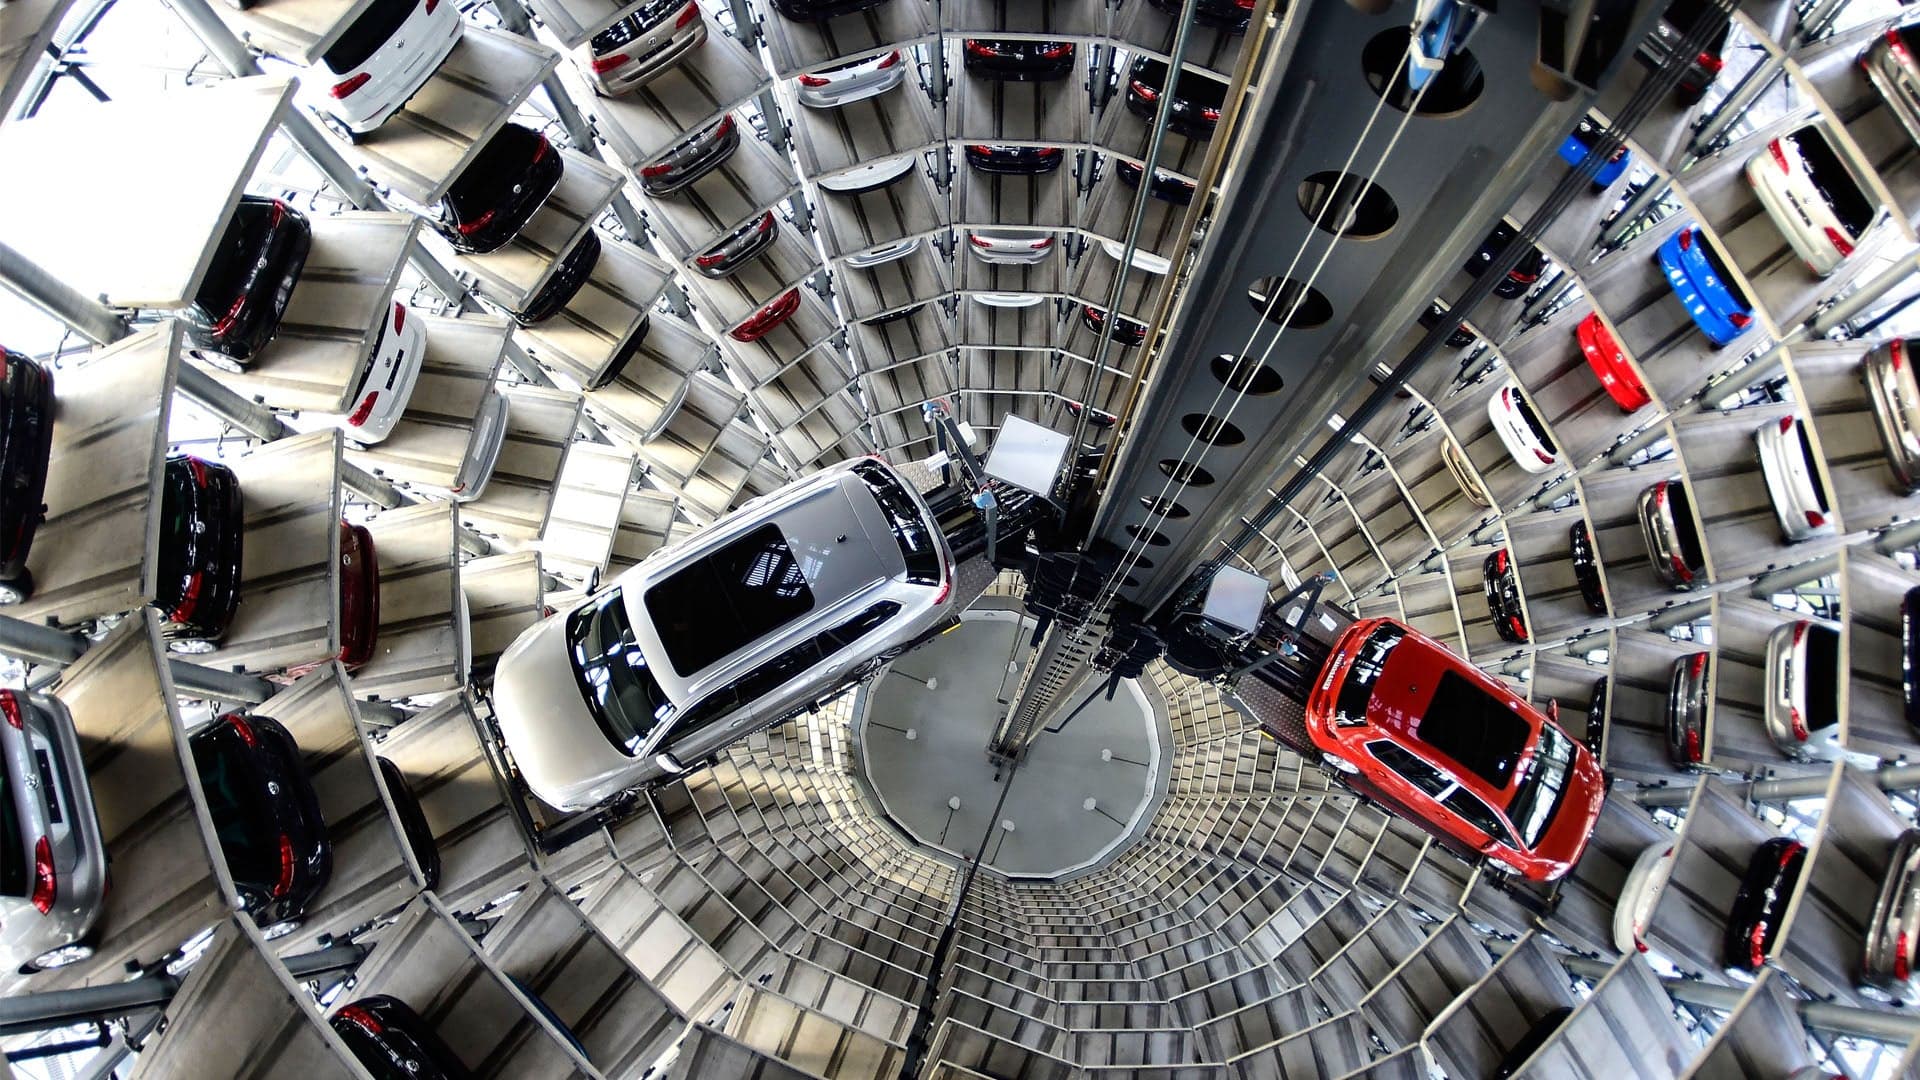 ‘Super Modern’ MK7 Volkswagen Jetta Will Get Manual Transmission and R-Line Trim